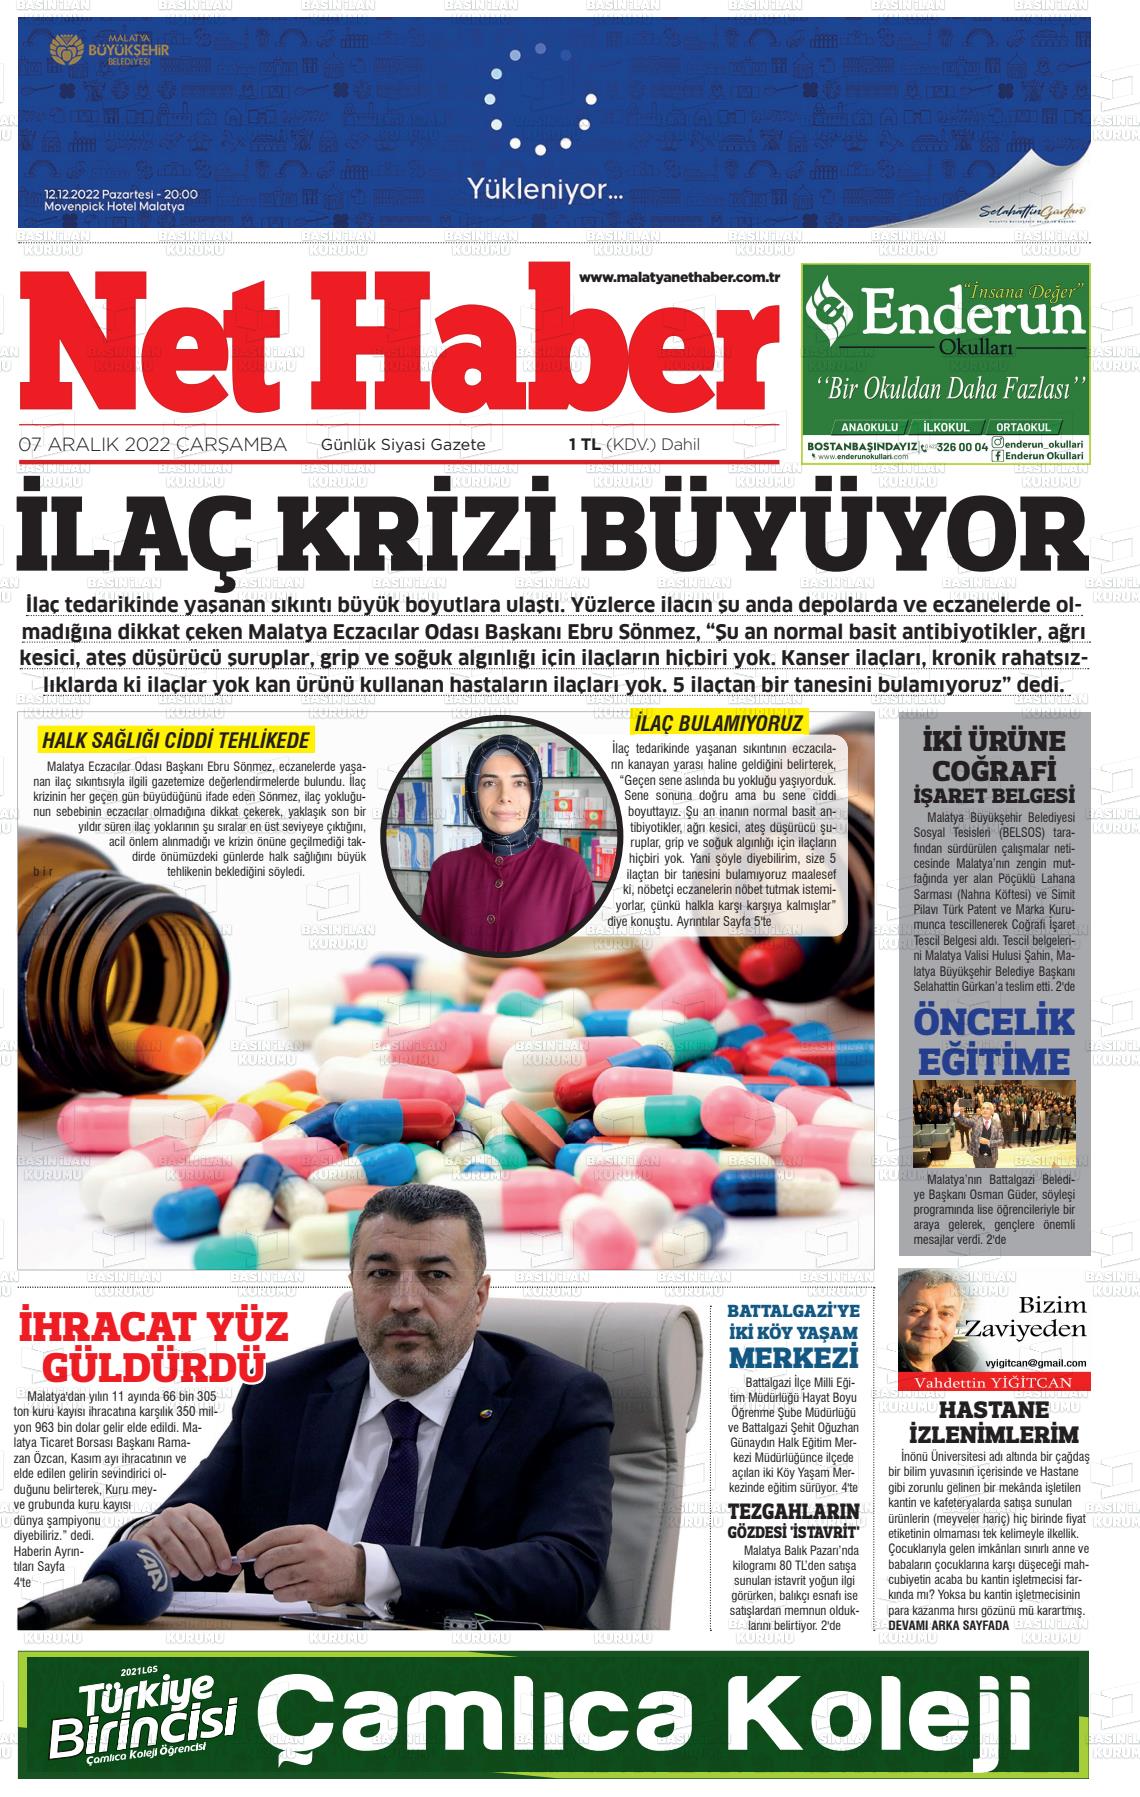 07 Aralık 2022 MALATYA NET HABER Gazete Manşeti